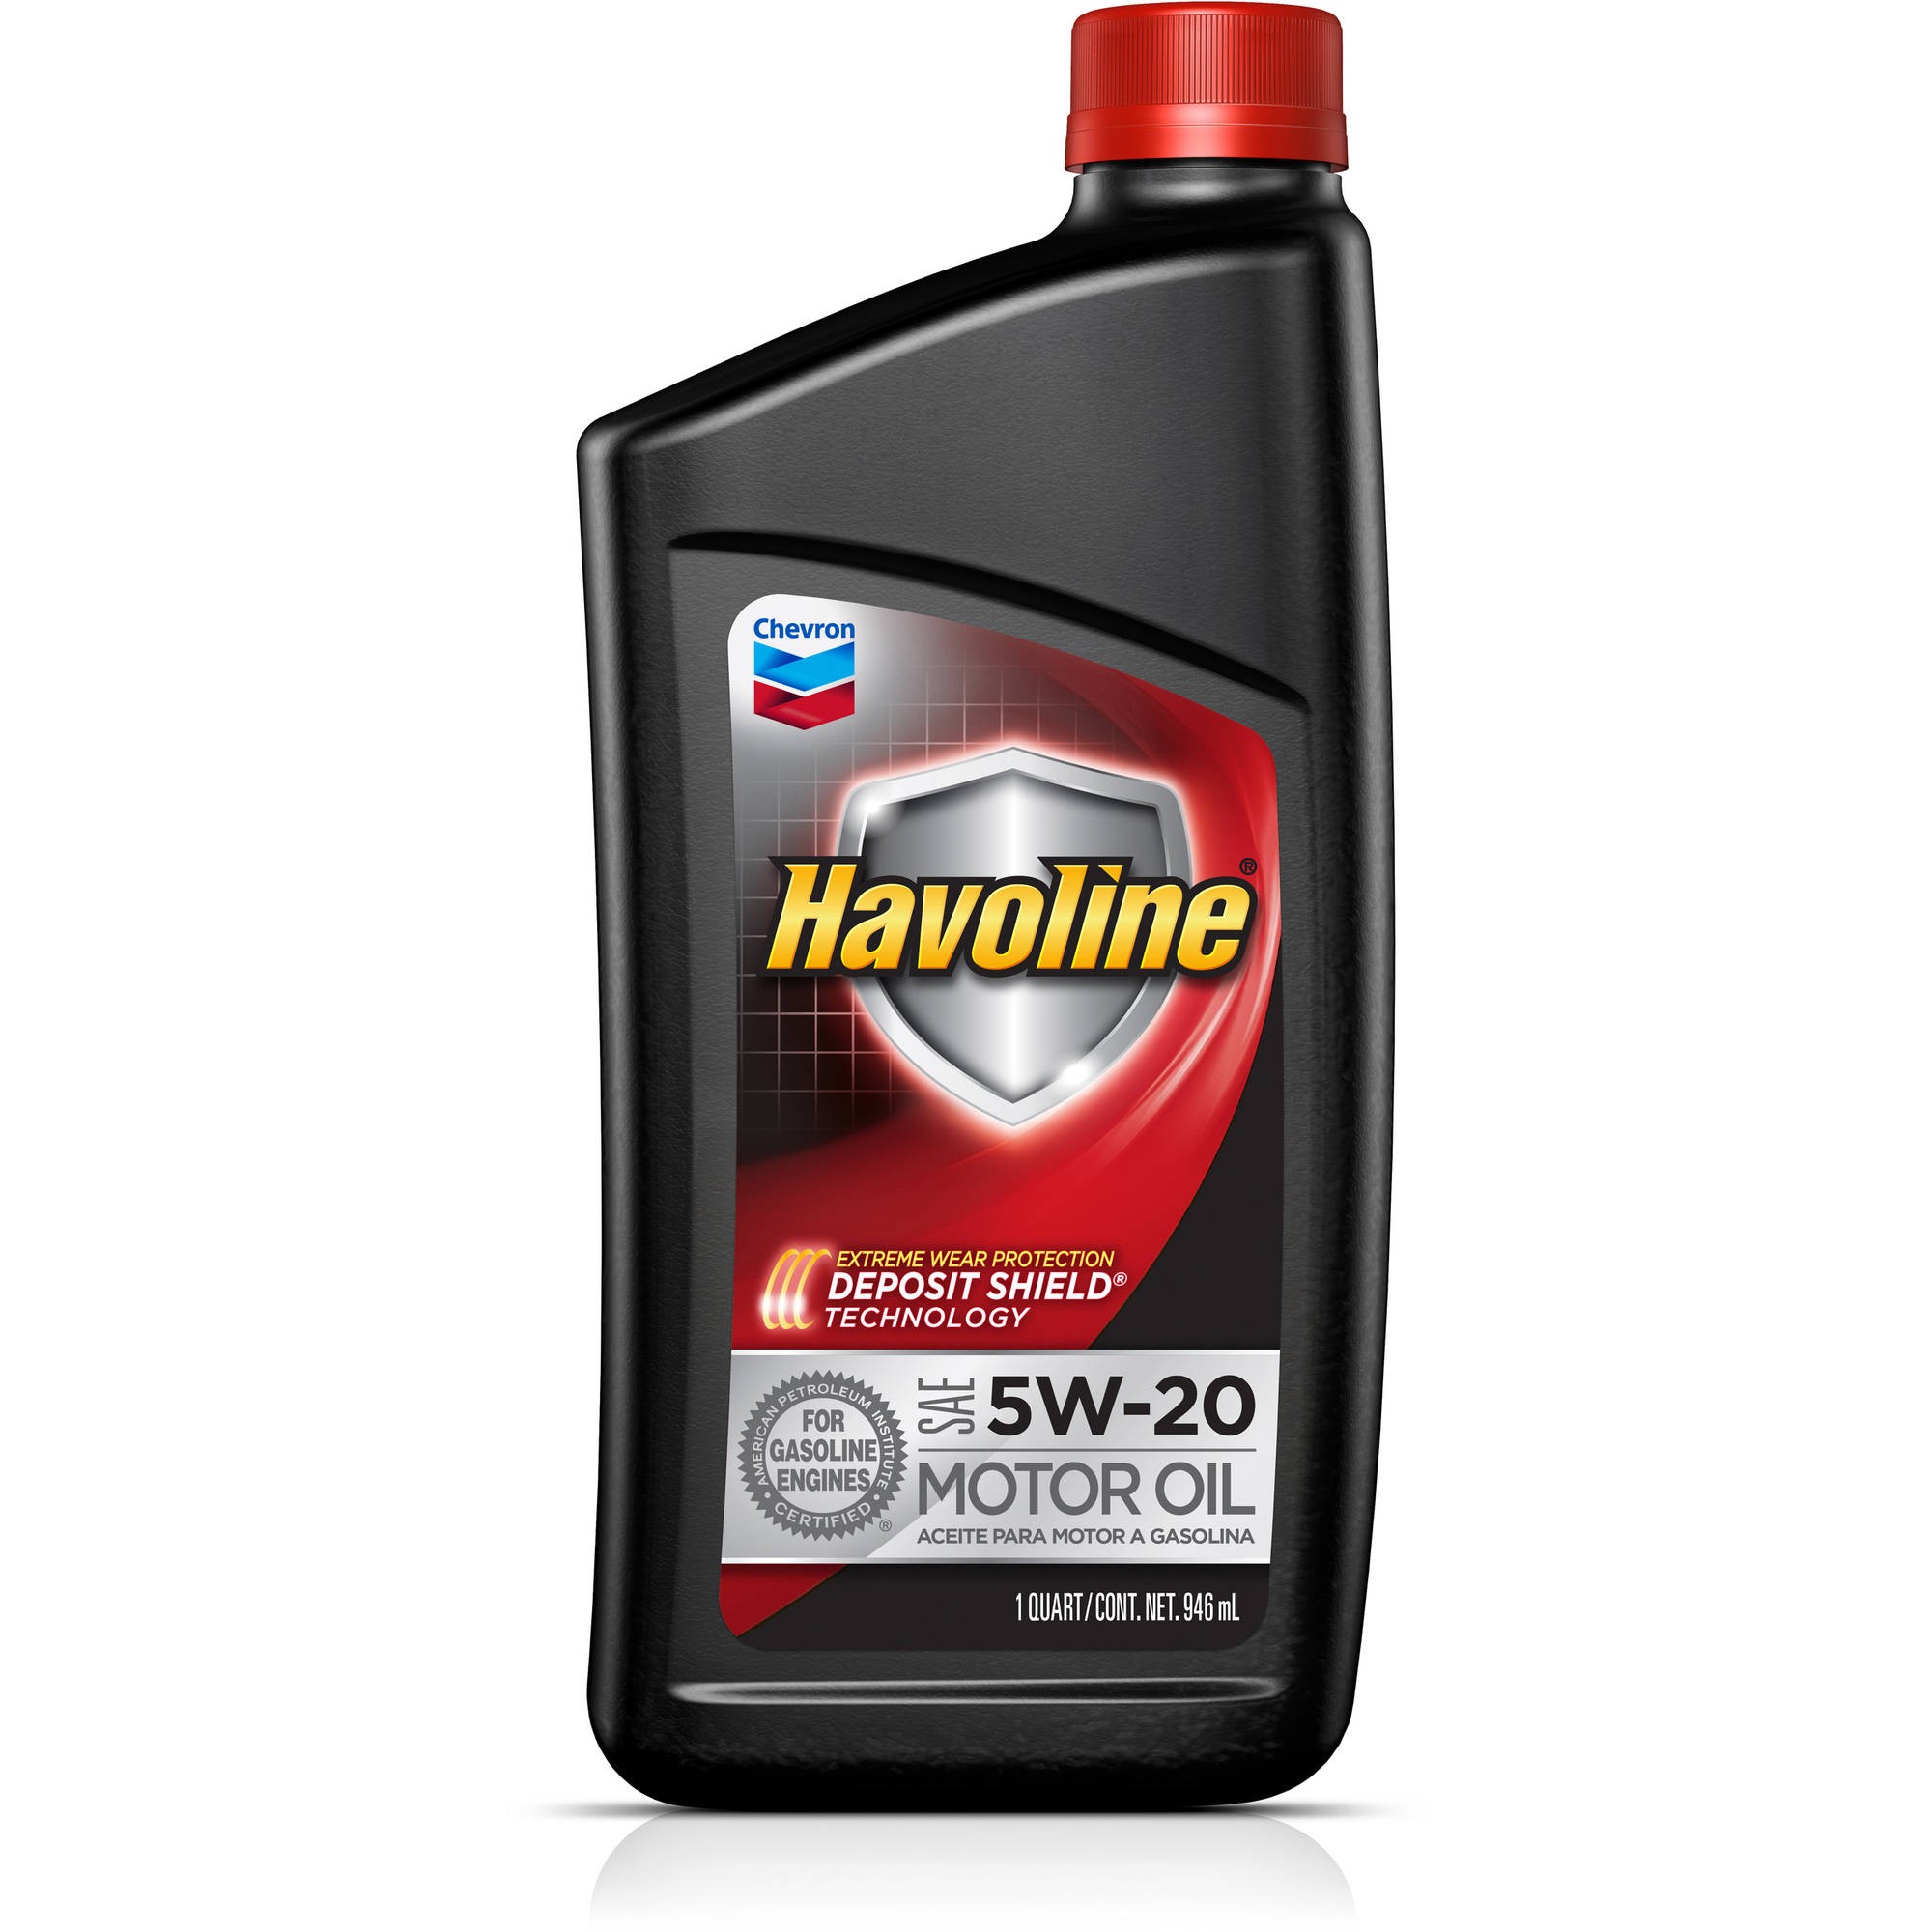 Chevron Havoline Motor Oil SAE 5W-20